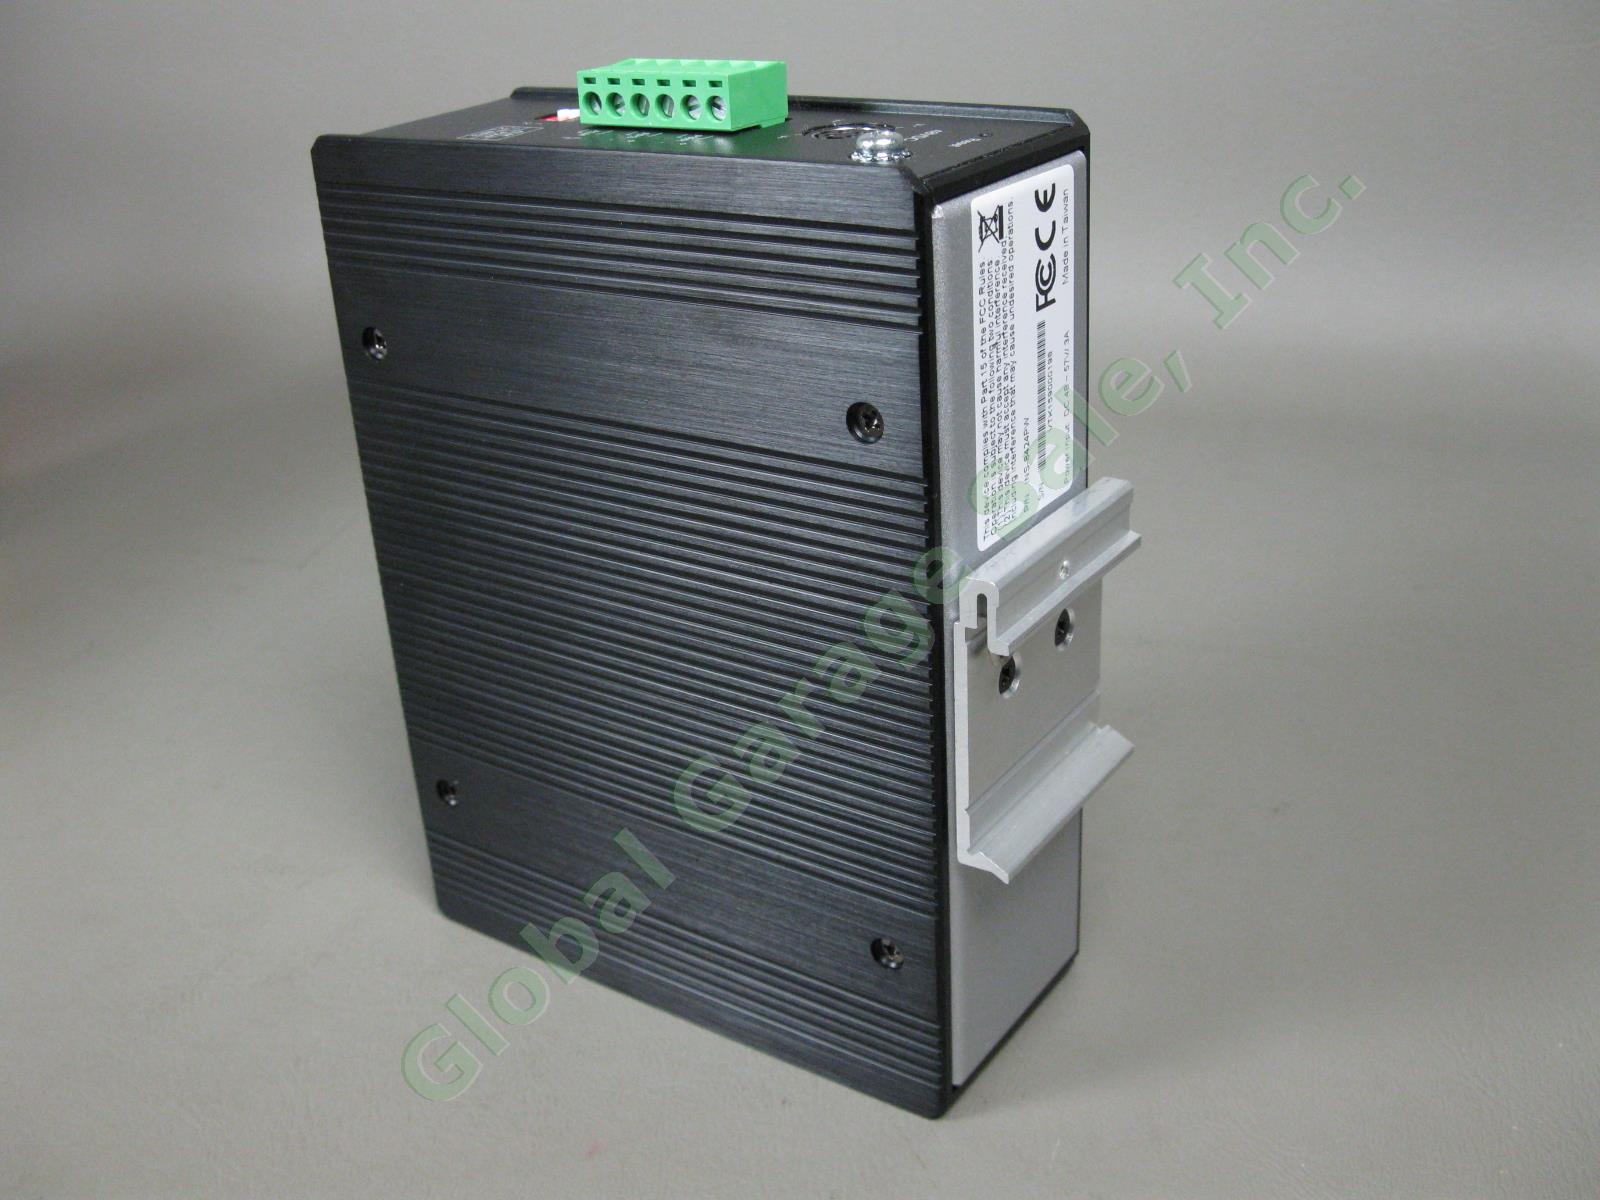 INS-8424PW 4 Port Industrial PoE Unmanaged Gigabit 10/100/1000 Din Rail Switch 4